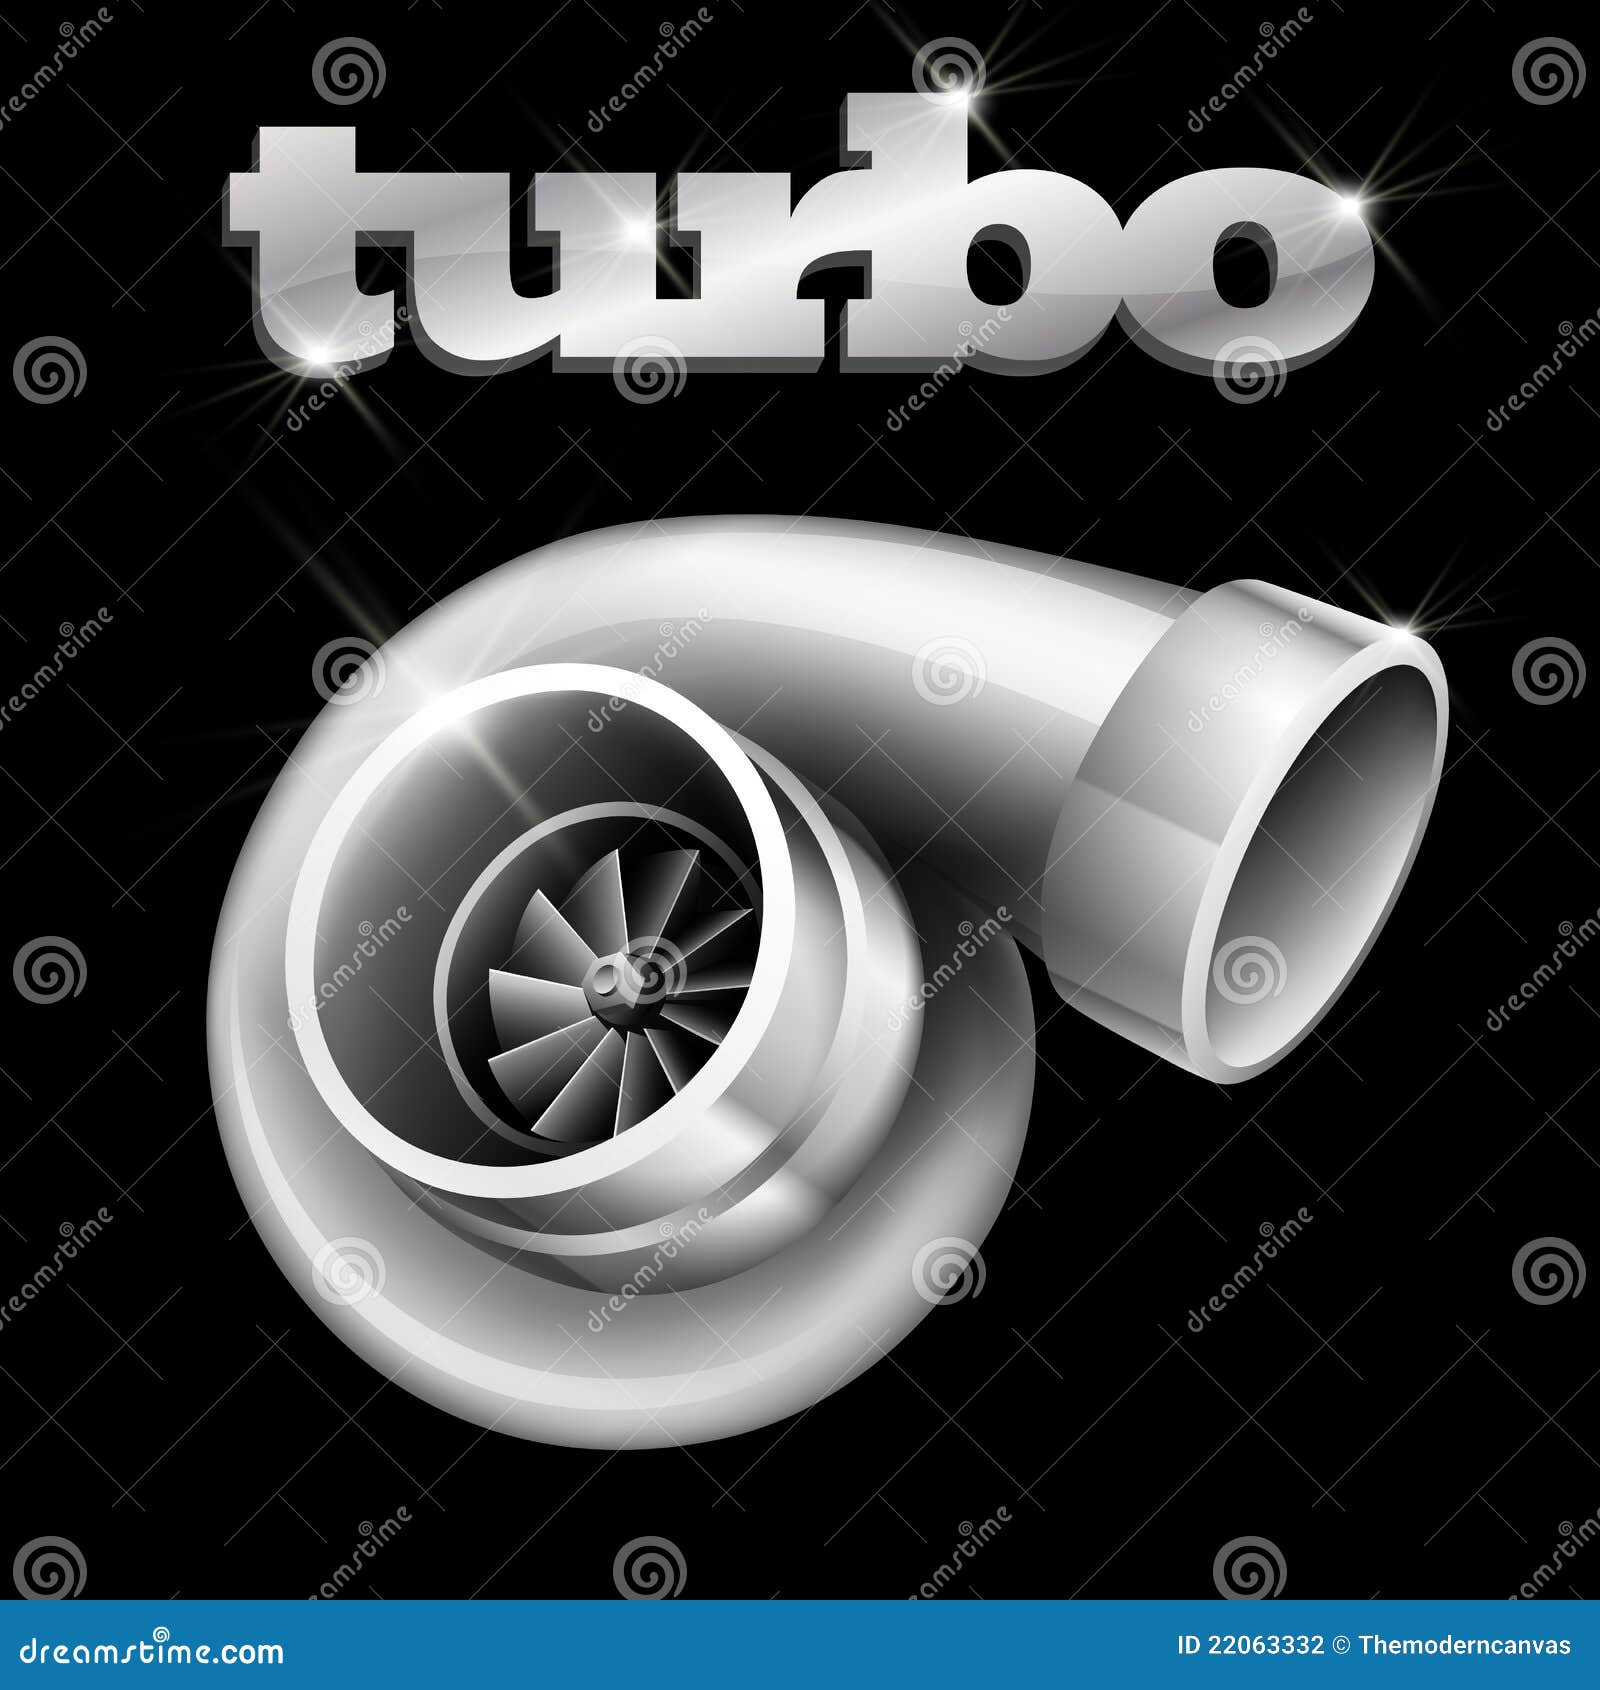 turbo compressor for an automobile